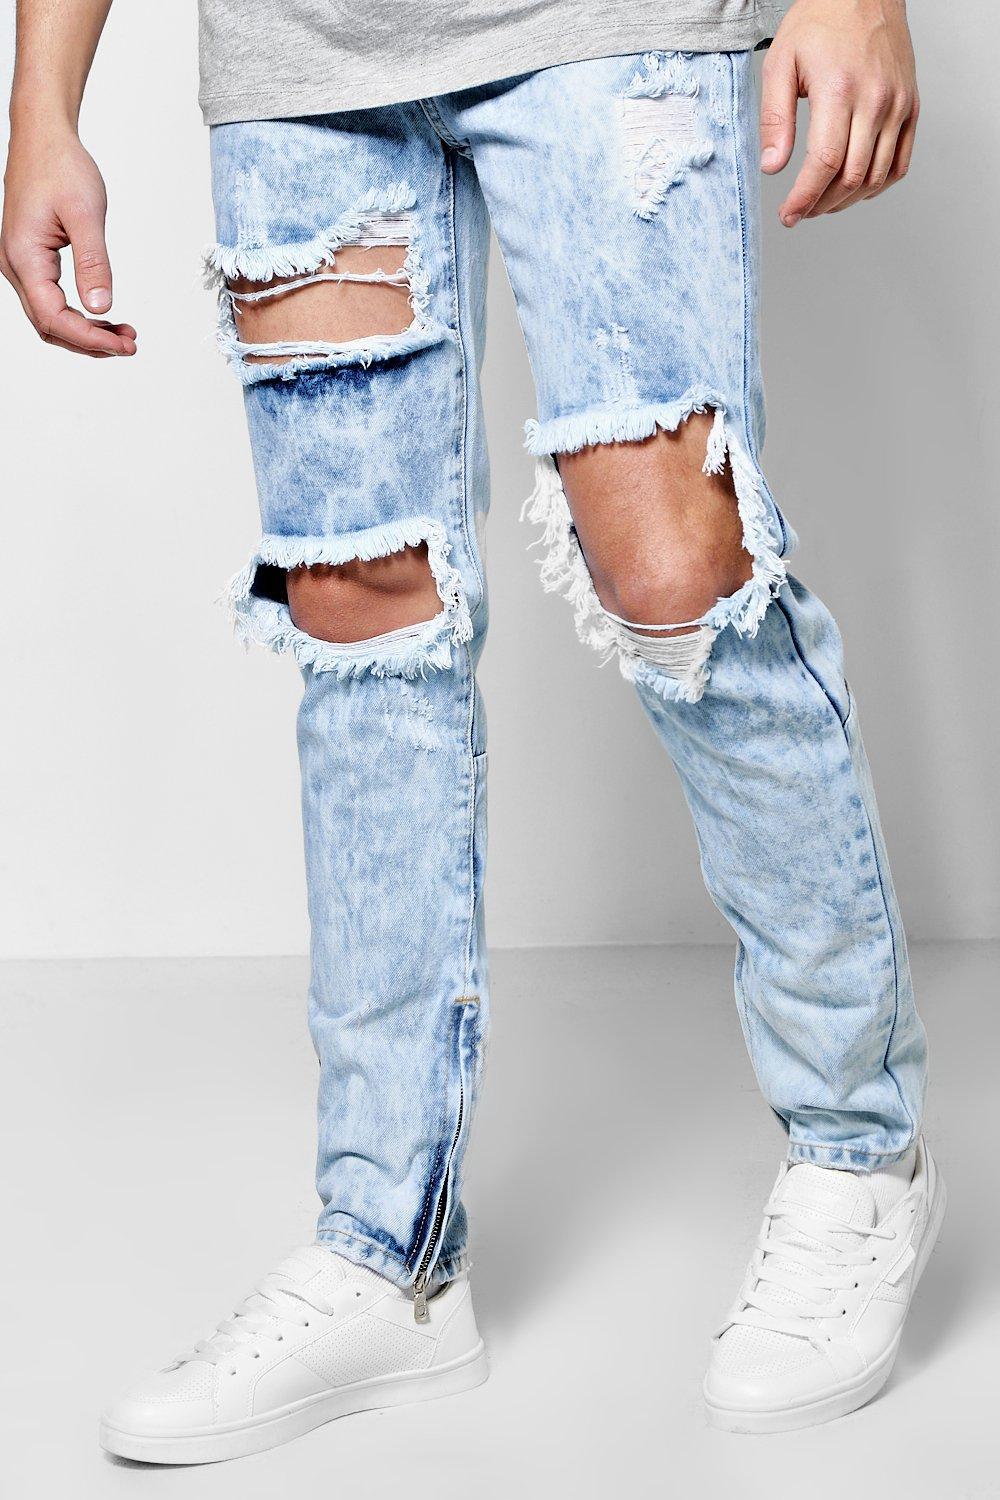 Boohoo Denim Skinny Fit Rigid Acid Wash Ripped Jeans in Pale Blue (Blue)  for Men - Lyst